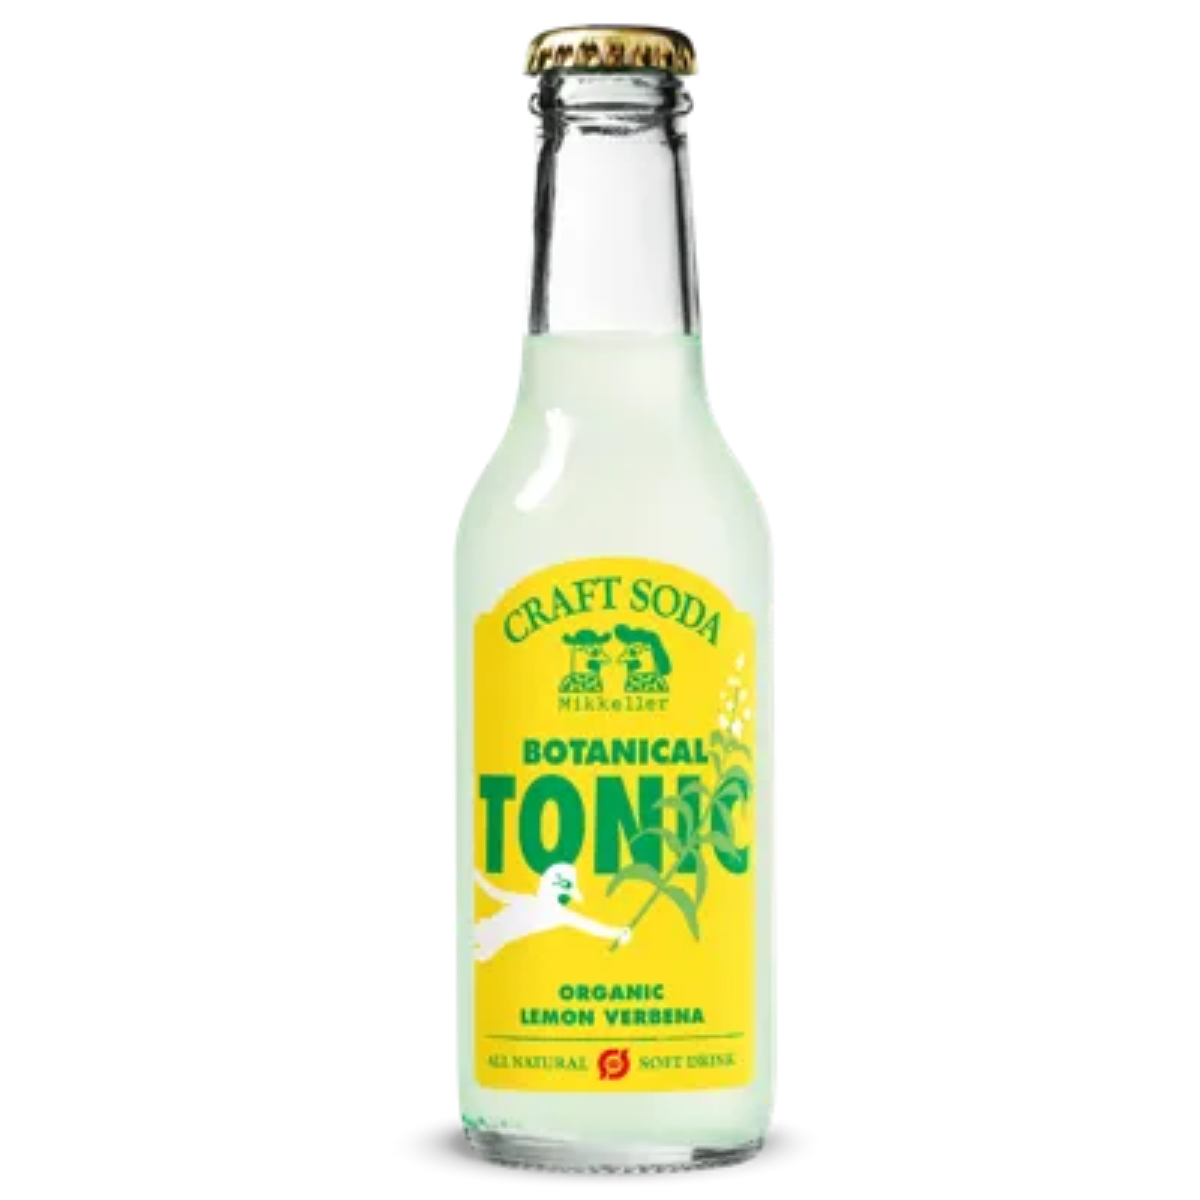 Eat My Brand's Craft soda Botanical Tonic'